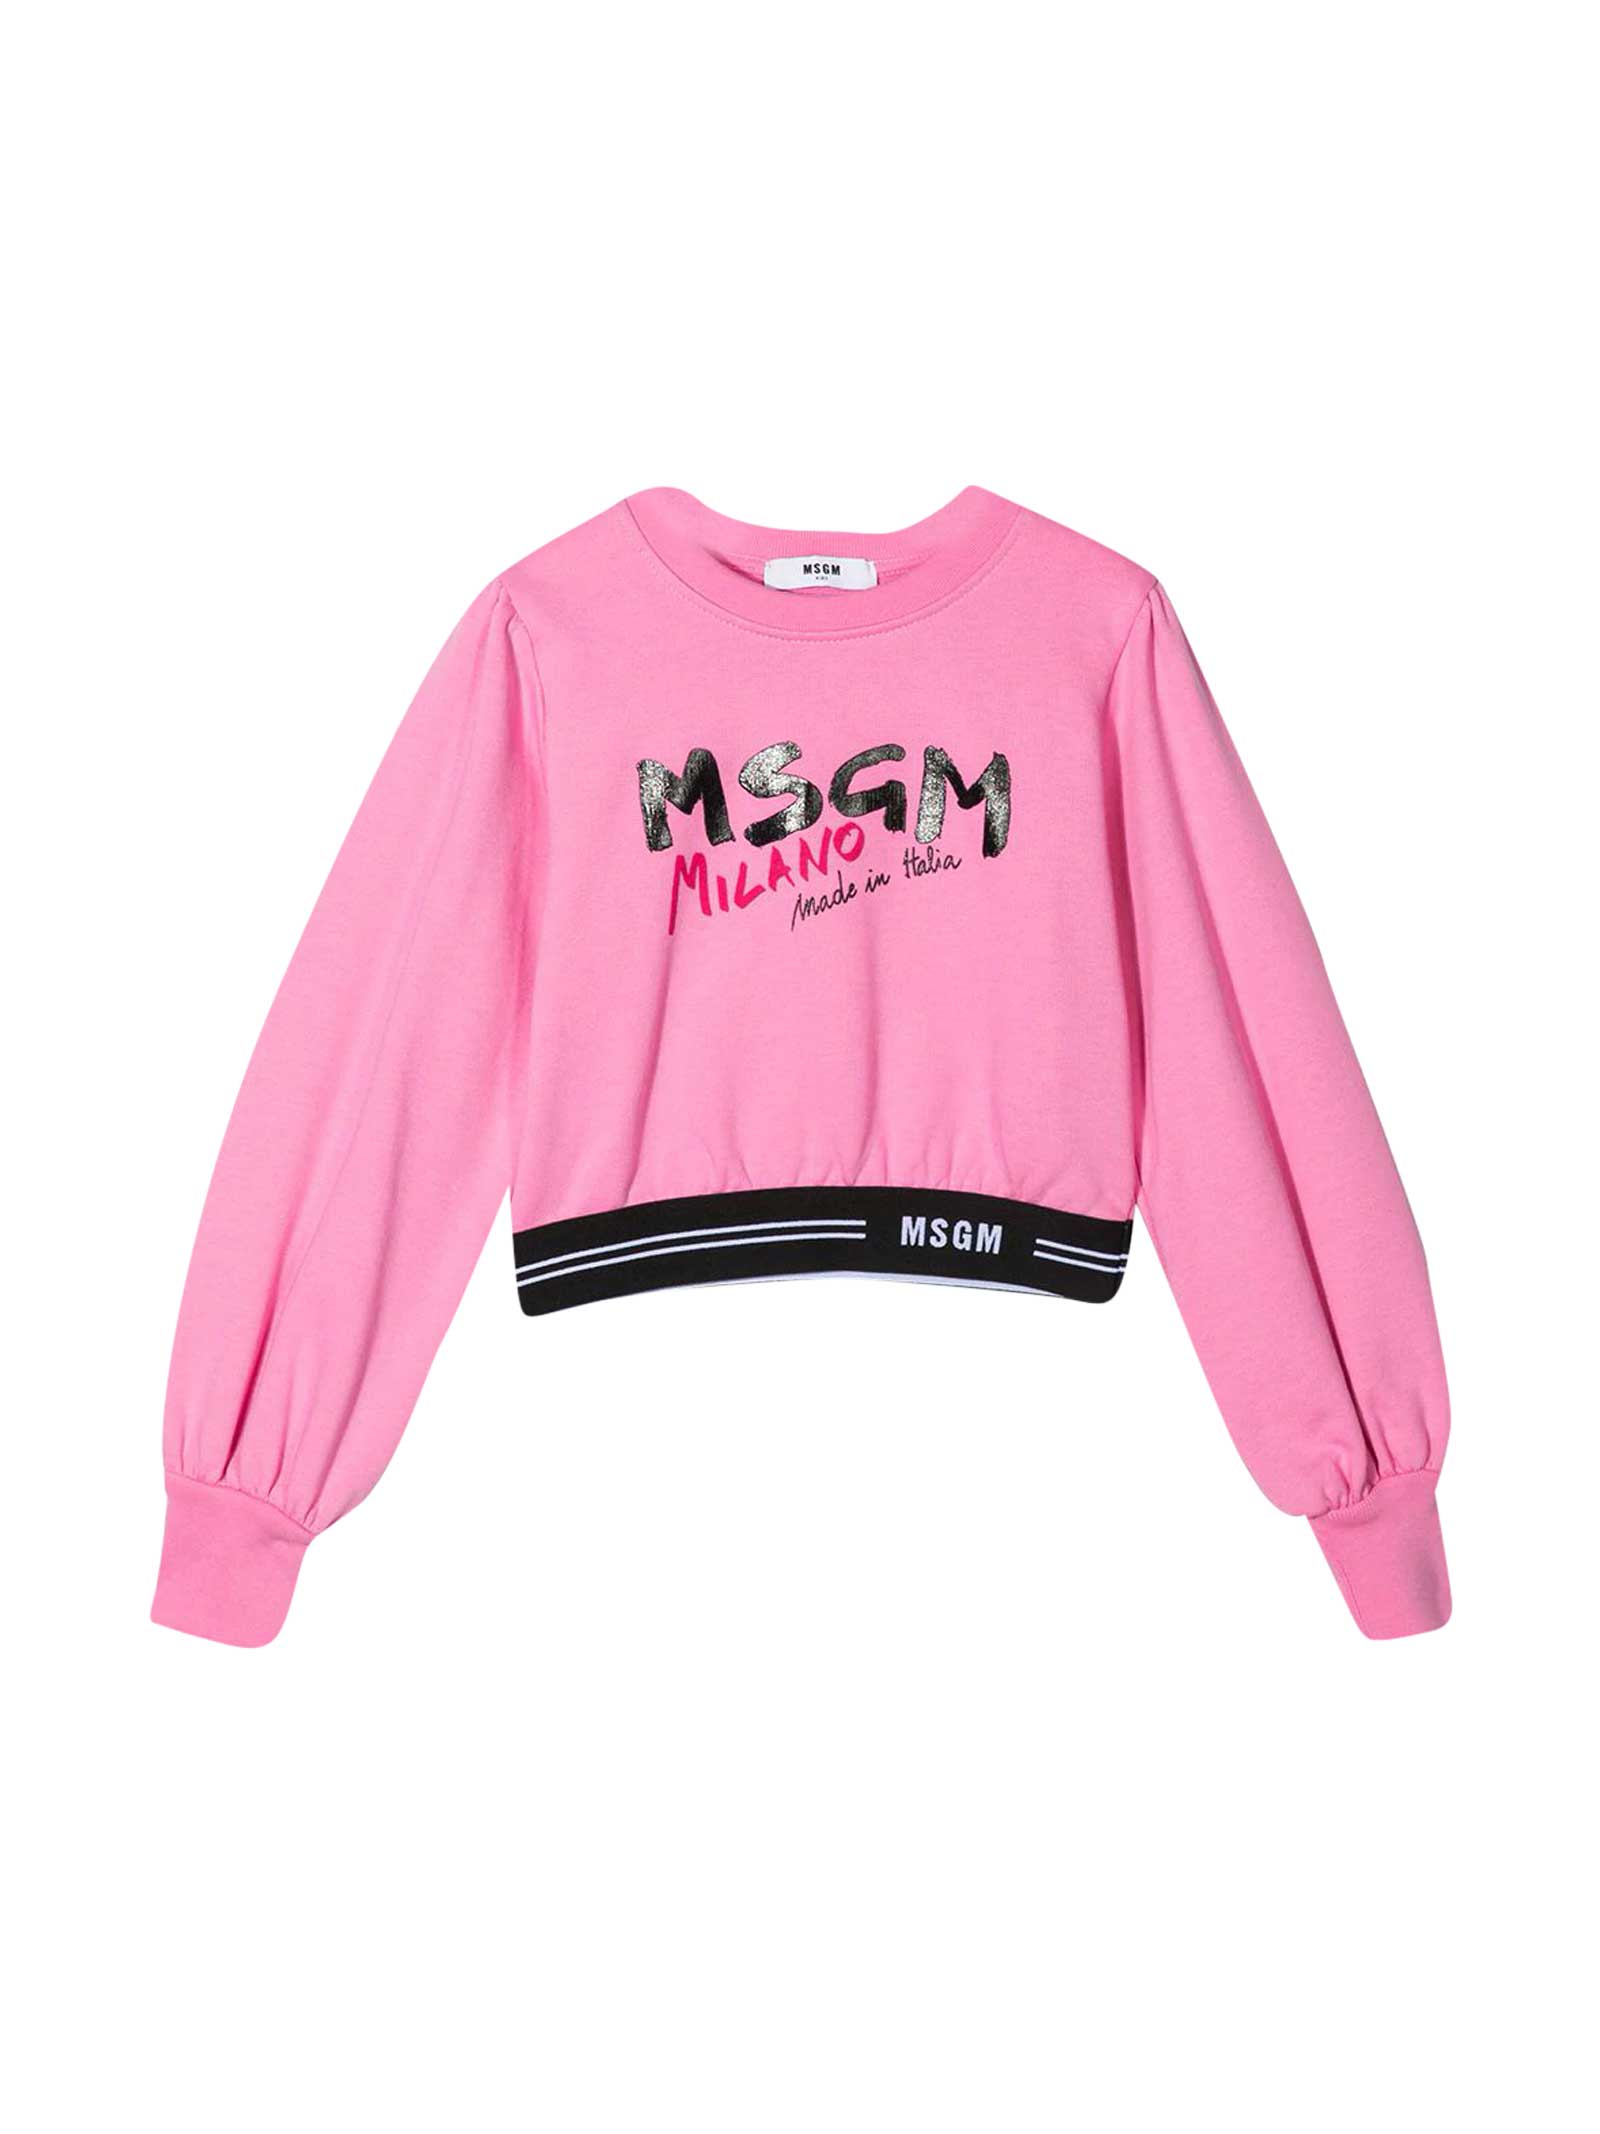 MSGM Pink Cropped Sweatshirt